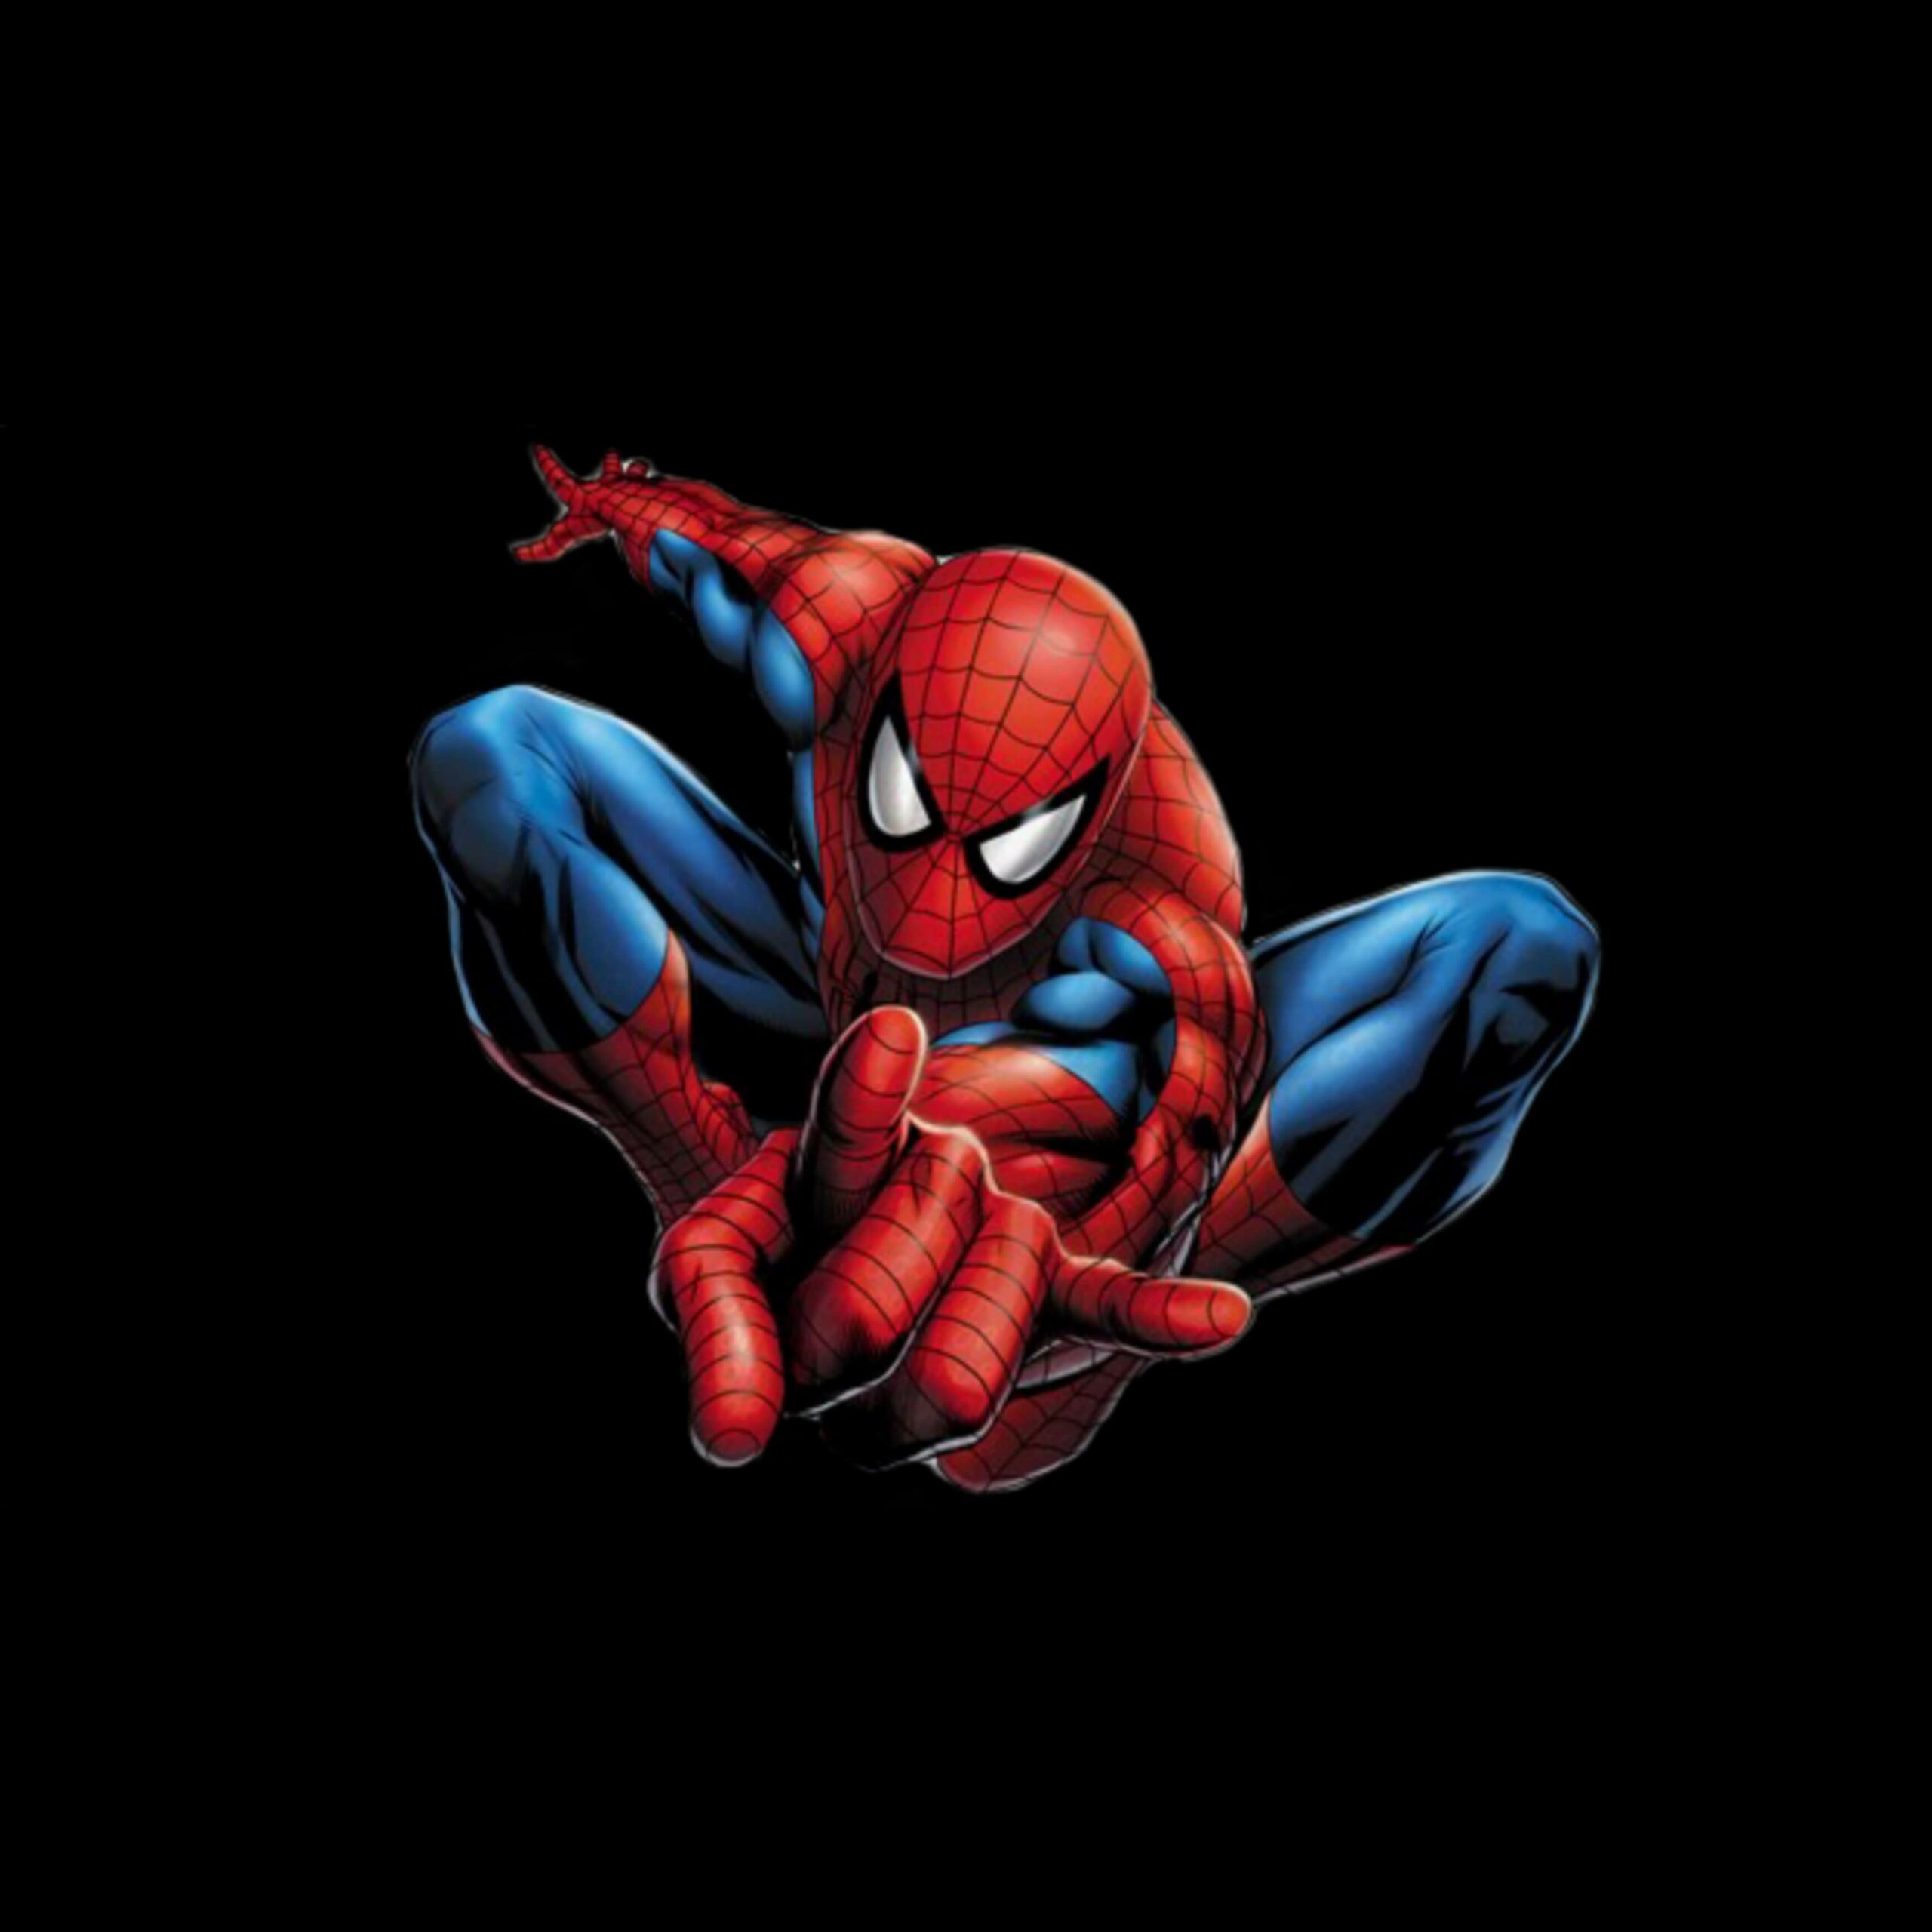 Spider Man DP for WhatsApp